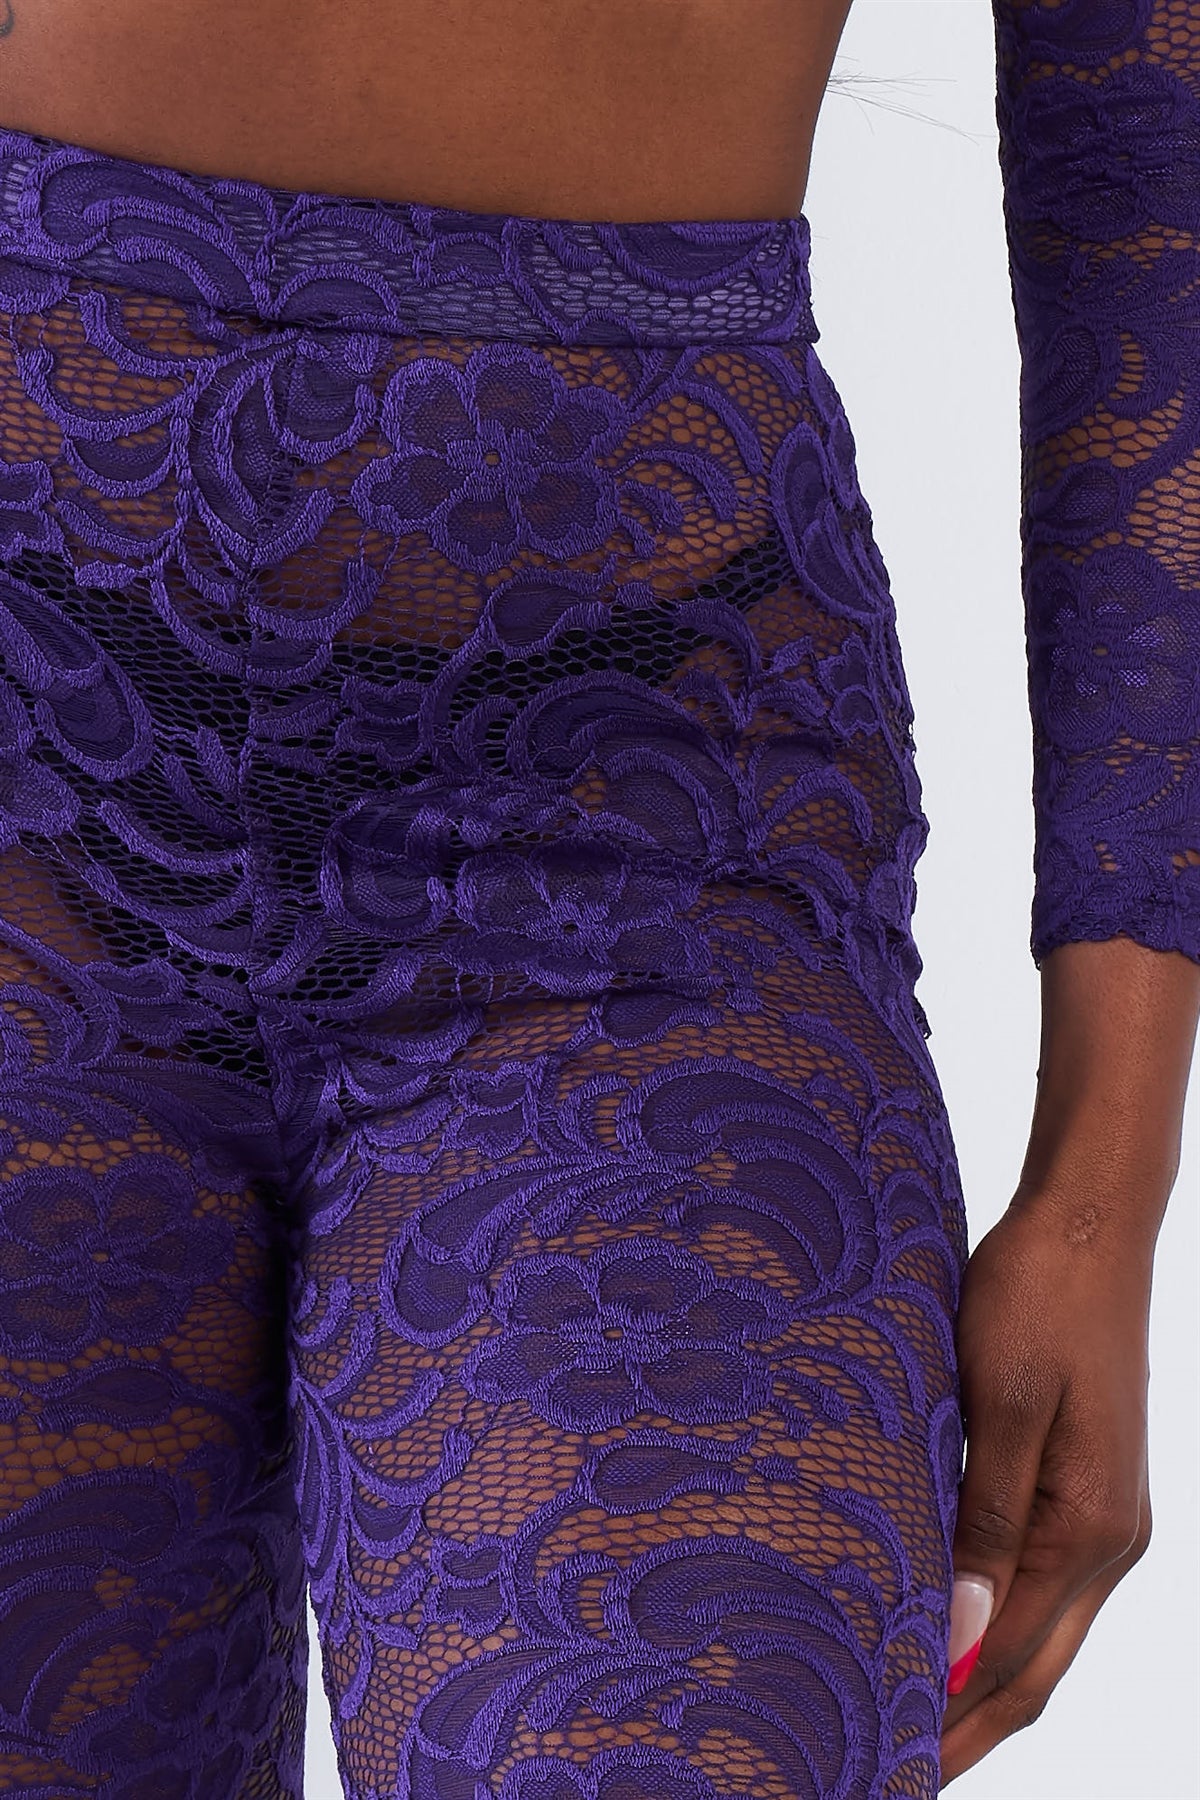 Sheer Floral Lace Crop Square Neck Top & High Waist Flare Pant Set - Fashion Quality Boutik